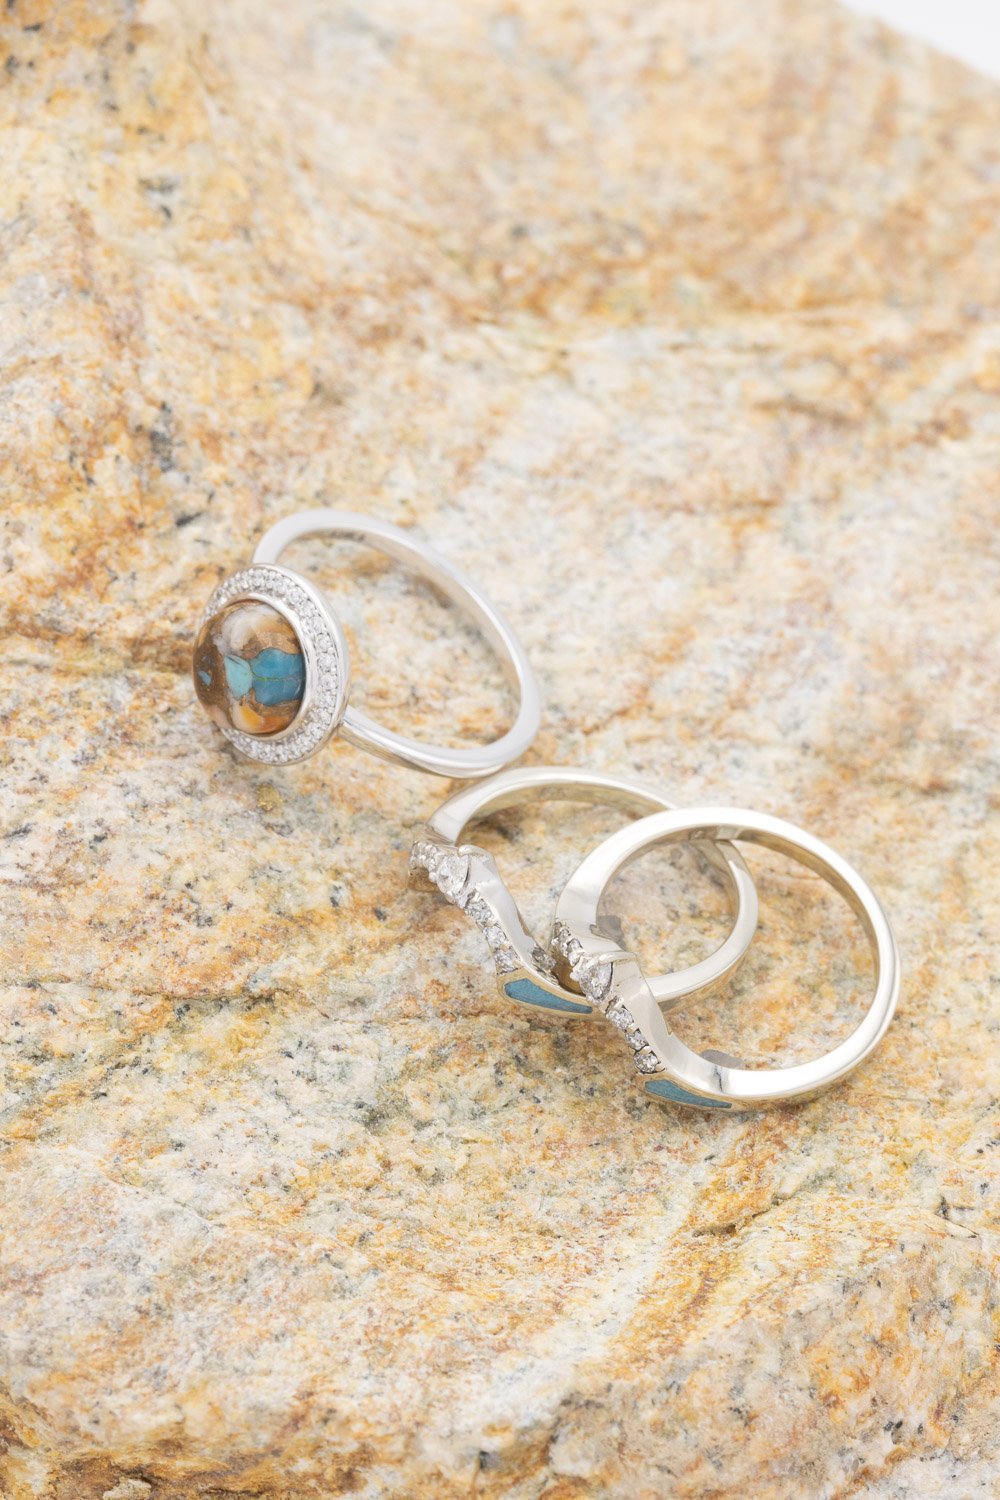 Vintage Oil-drip Turquoise Diamond Ring-canovaniajewelry